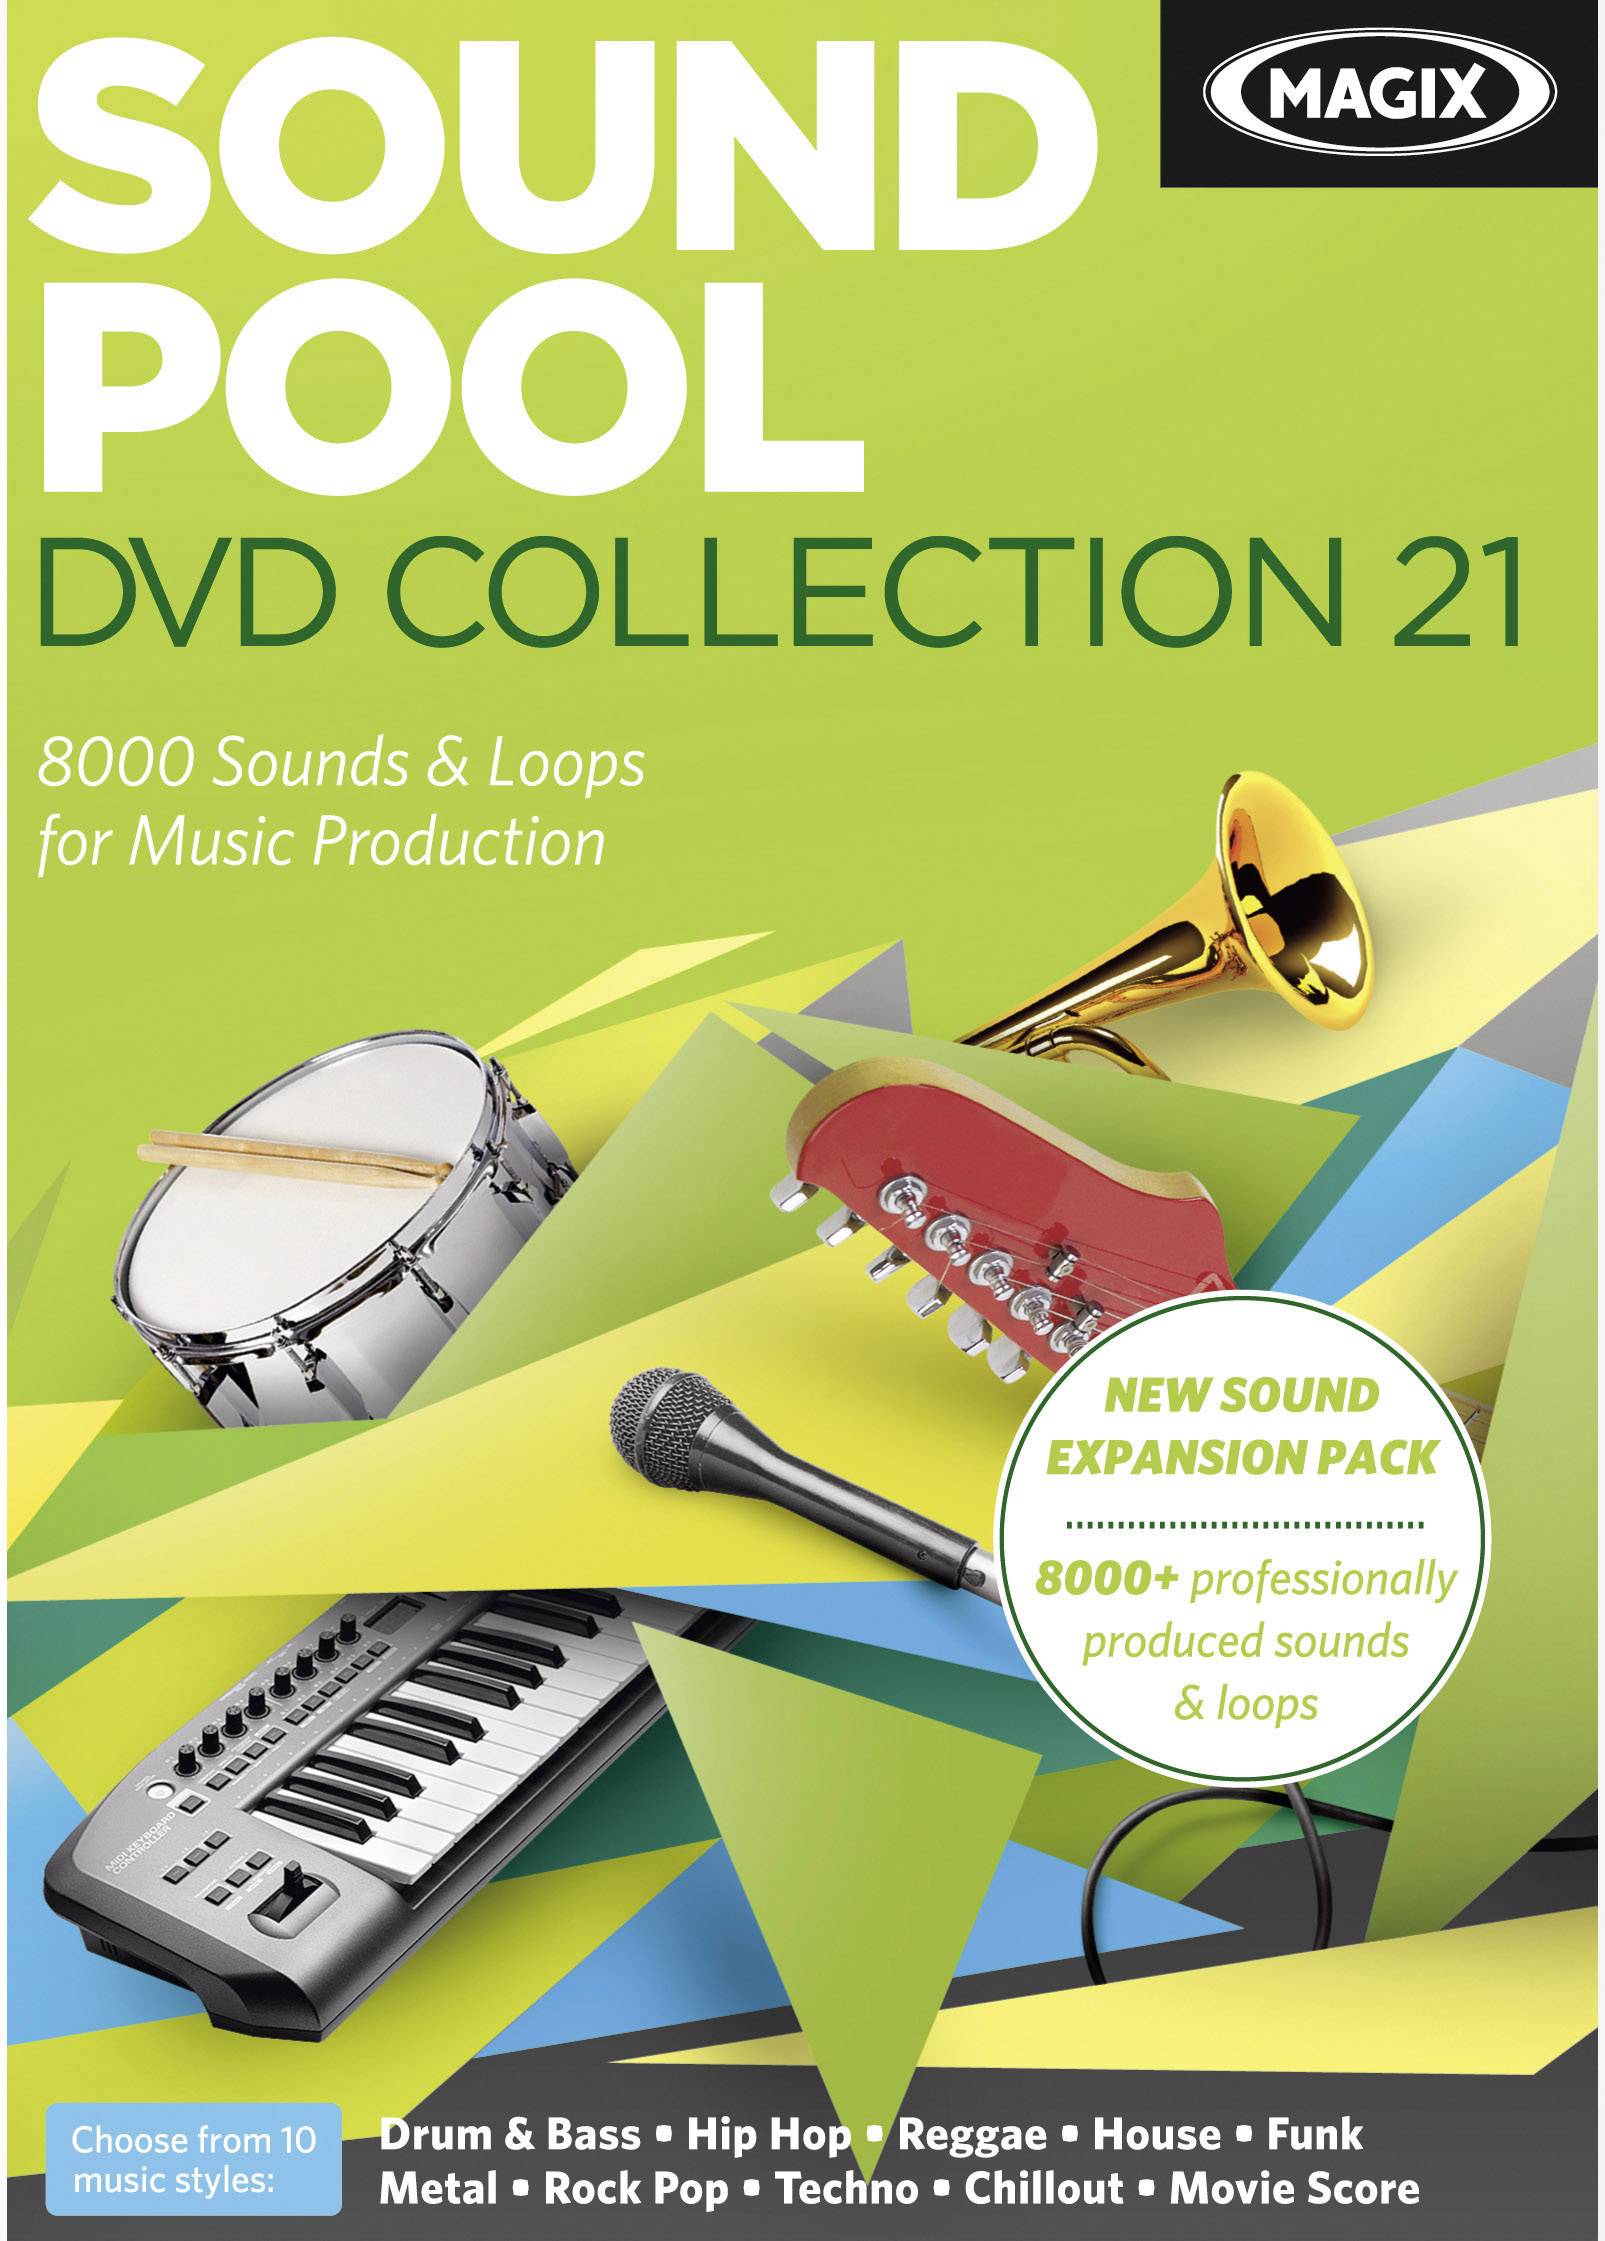 magix soundpool dvd collection 21 kickass